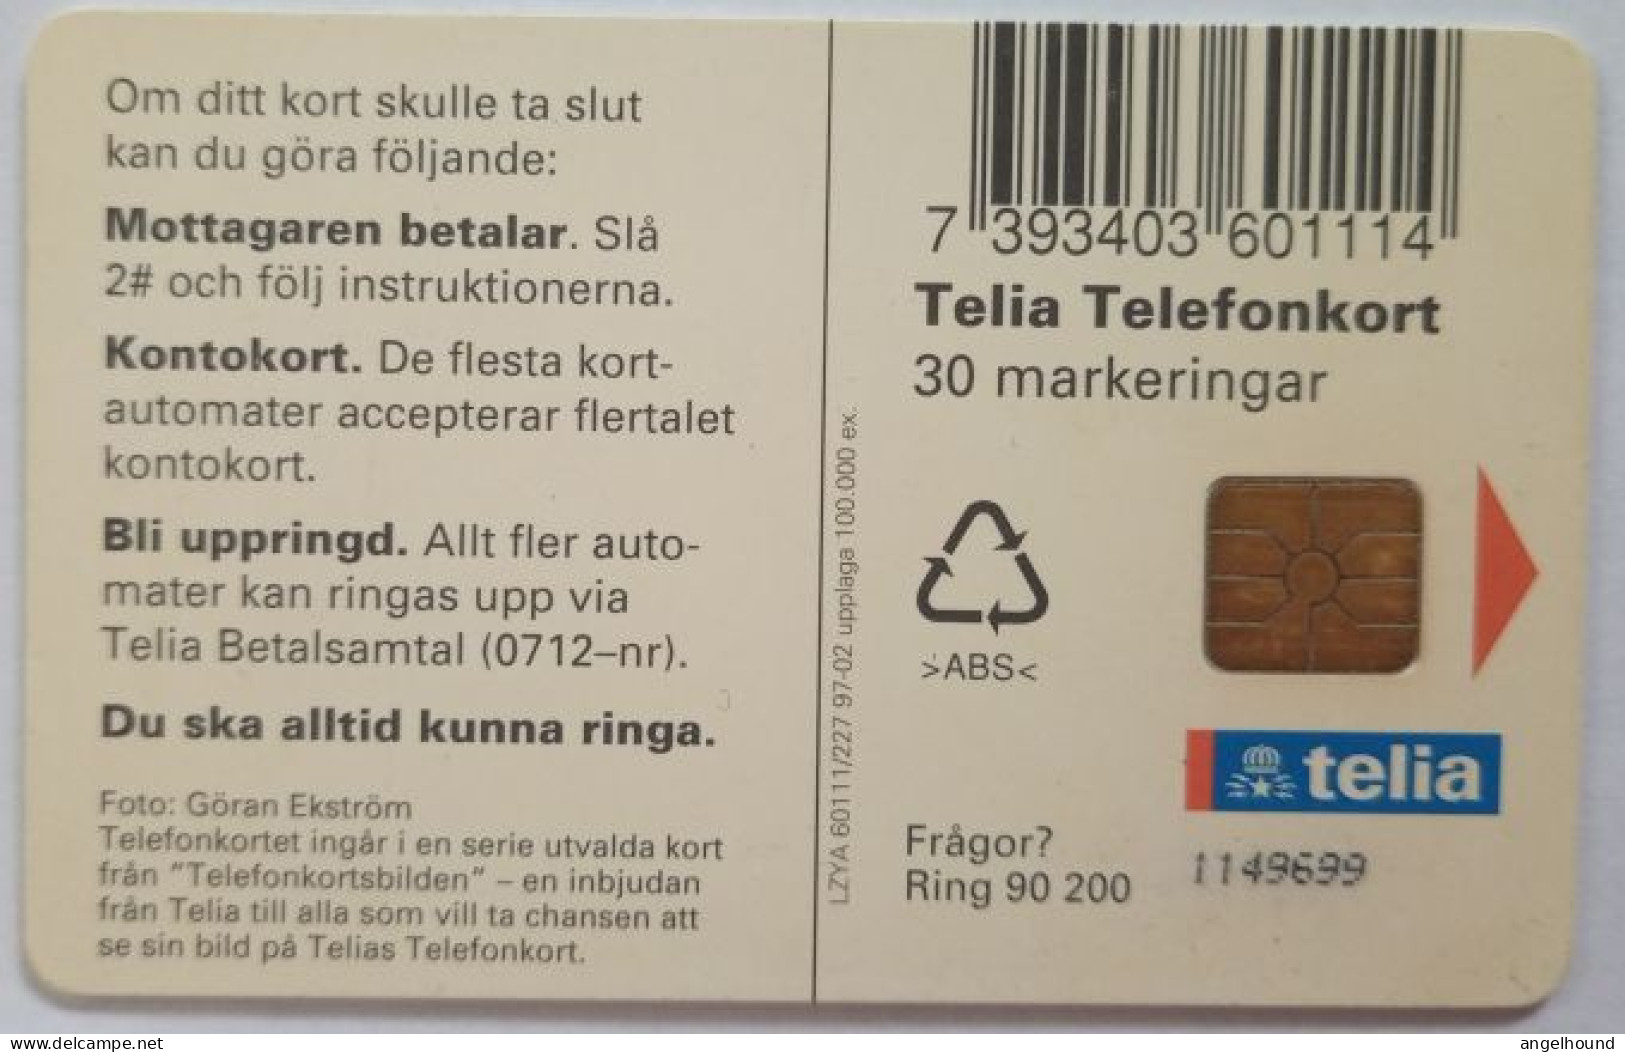 Sweden 30Mk. Chip Card - Albino Elk - White Moose - Suède